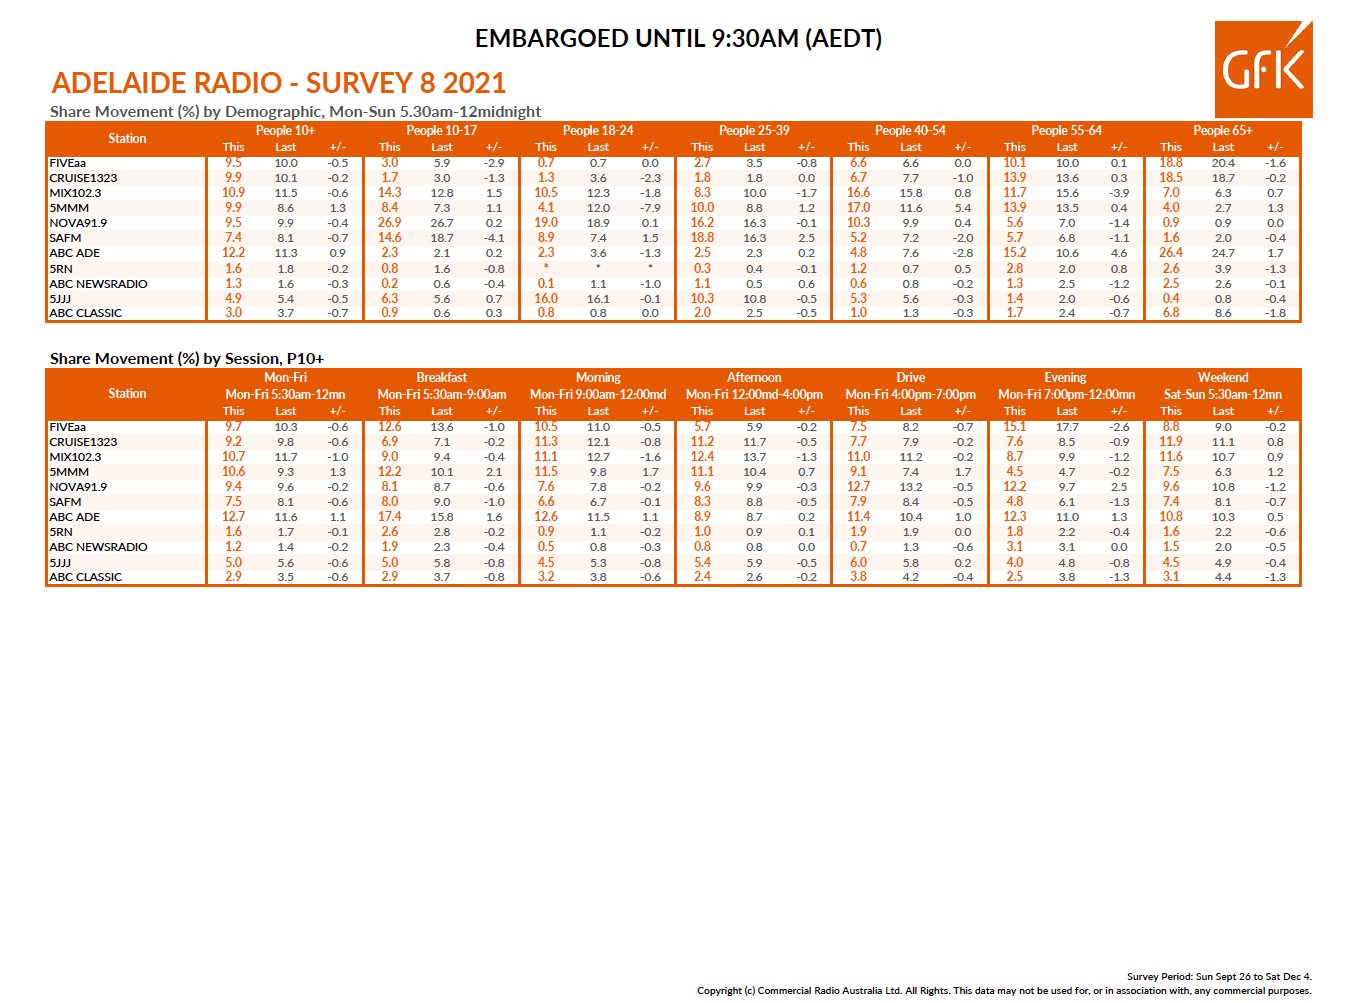 Adelaide GFK Survey 8 Ratings